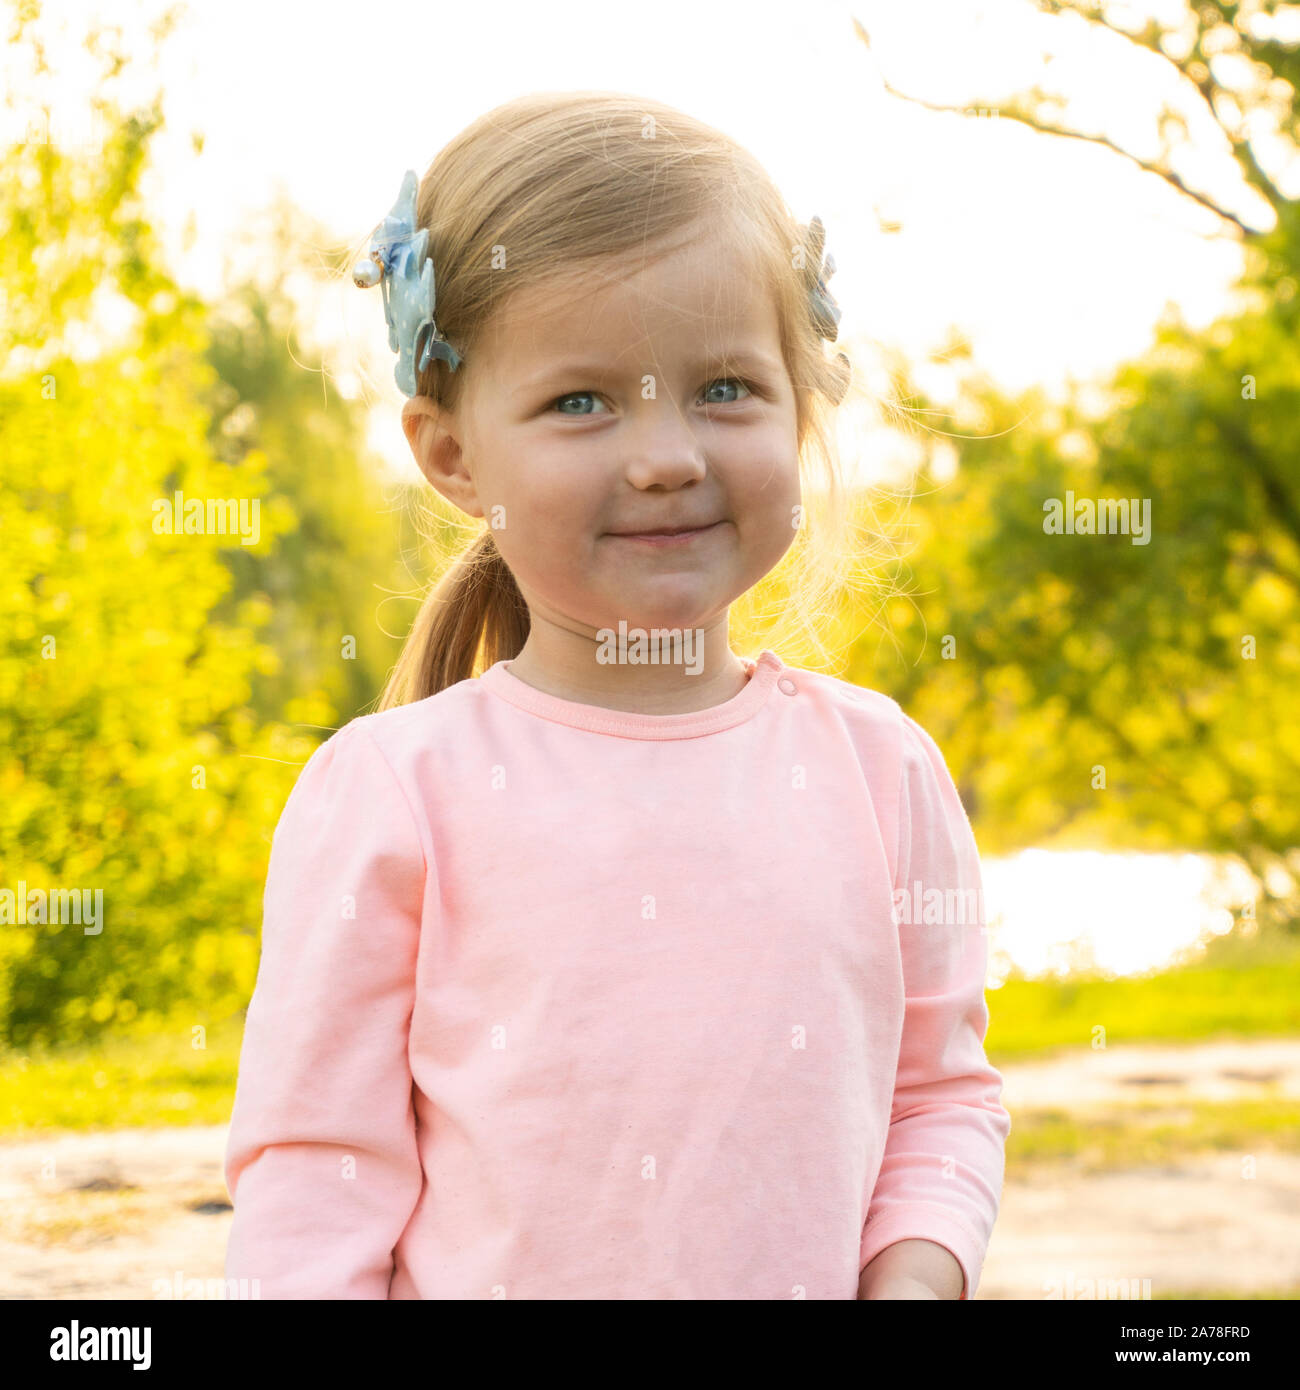 Sweet adorable little kid girl is smiling Stock Photo